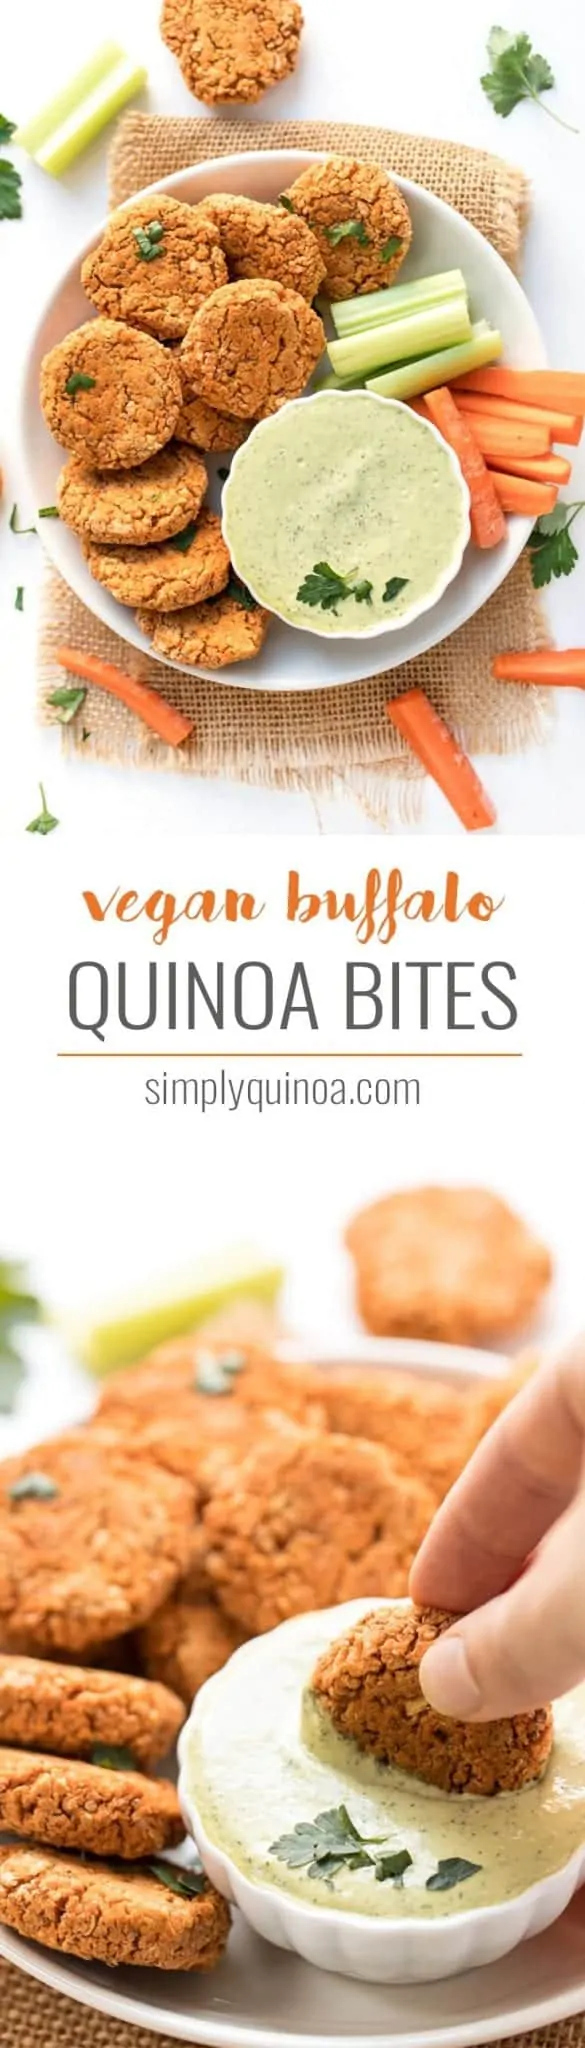 how to make vegan buffalo quinoa bites